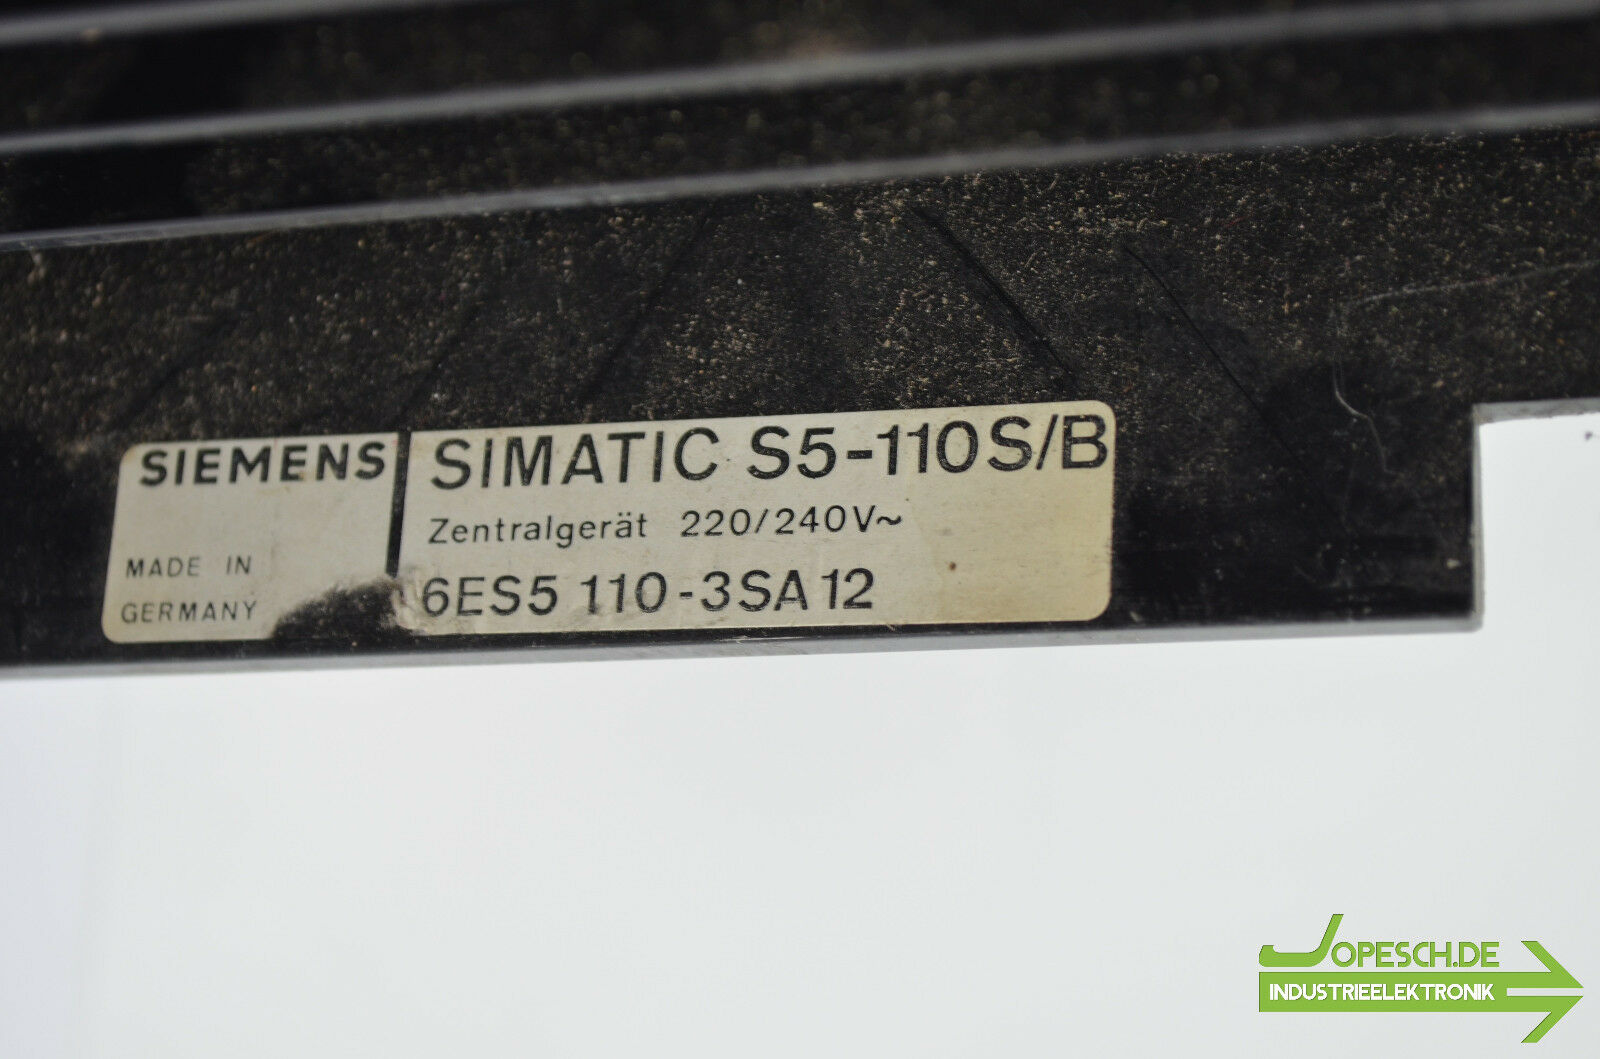 Siemens simatic S5-110S/B Zentralgerät 6ES5 932-3SA12 ( 6ES5932-3SA12 )